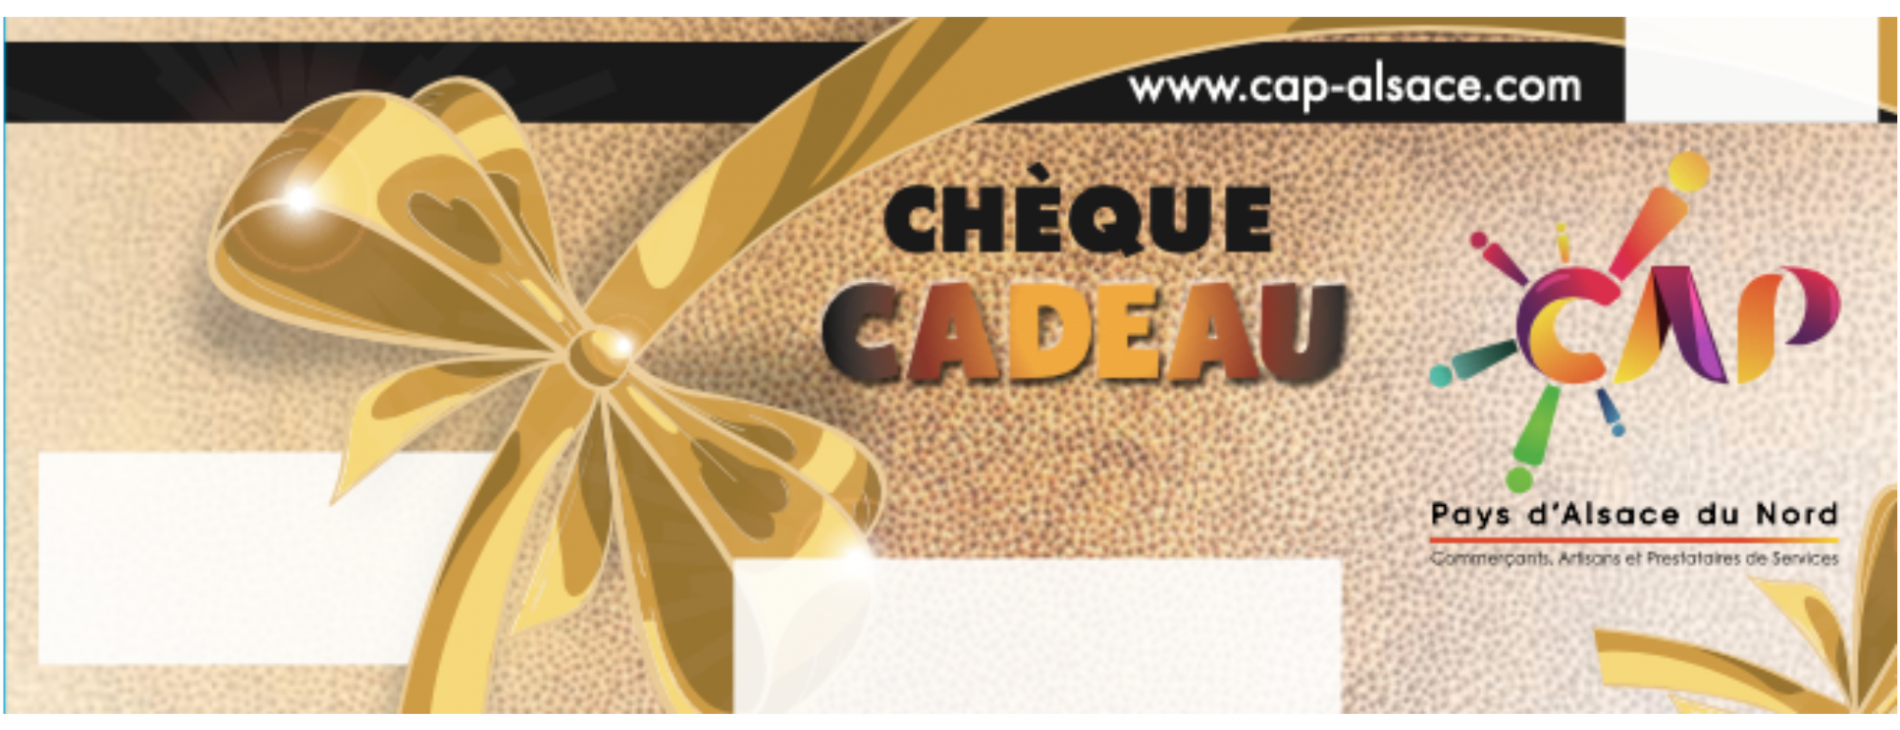 CAP ALSACE  - CHEQUE CADEAU HAGUENAU